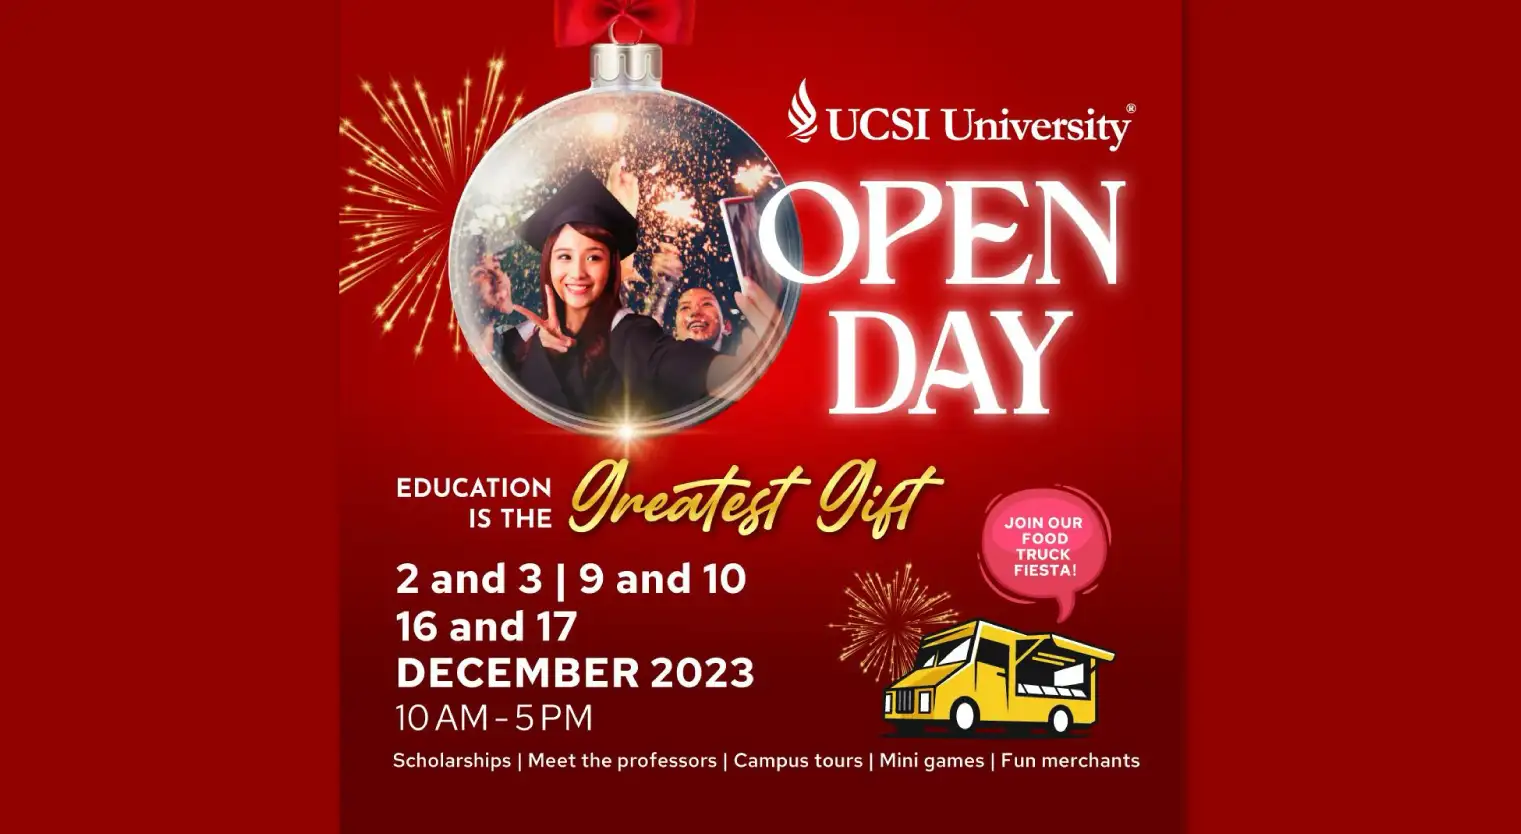 ucsi-university-open-day-december-2023